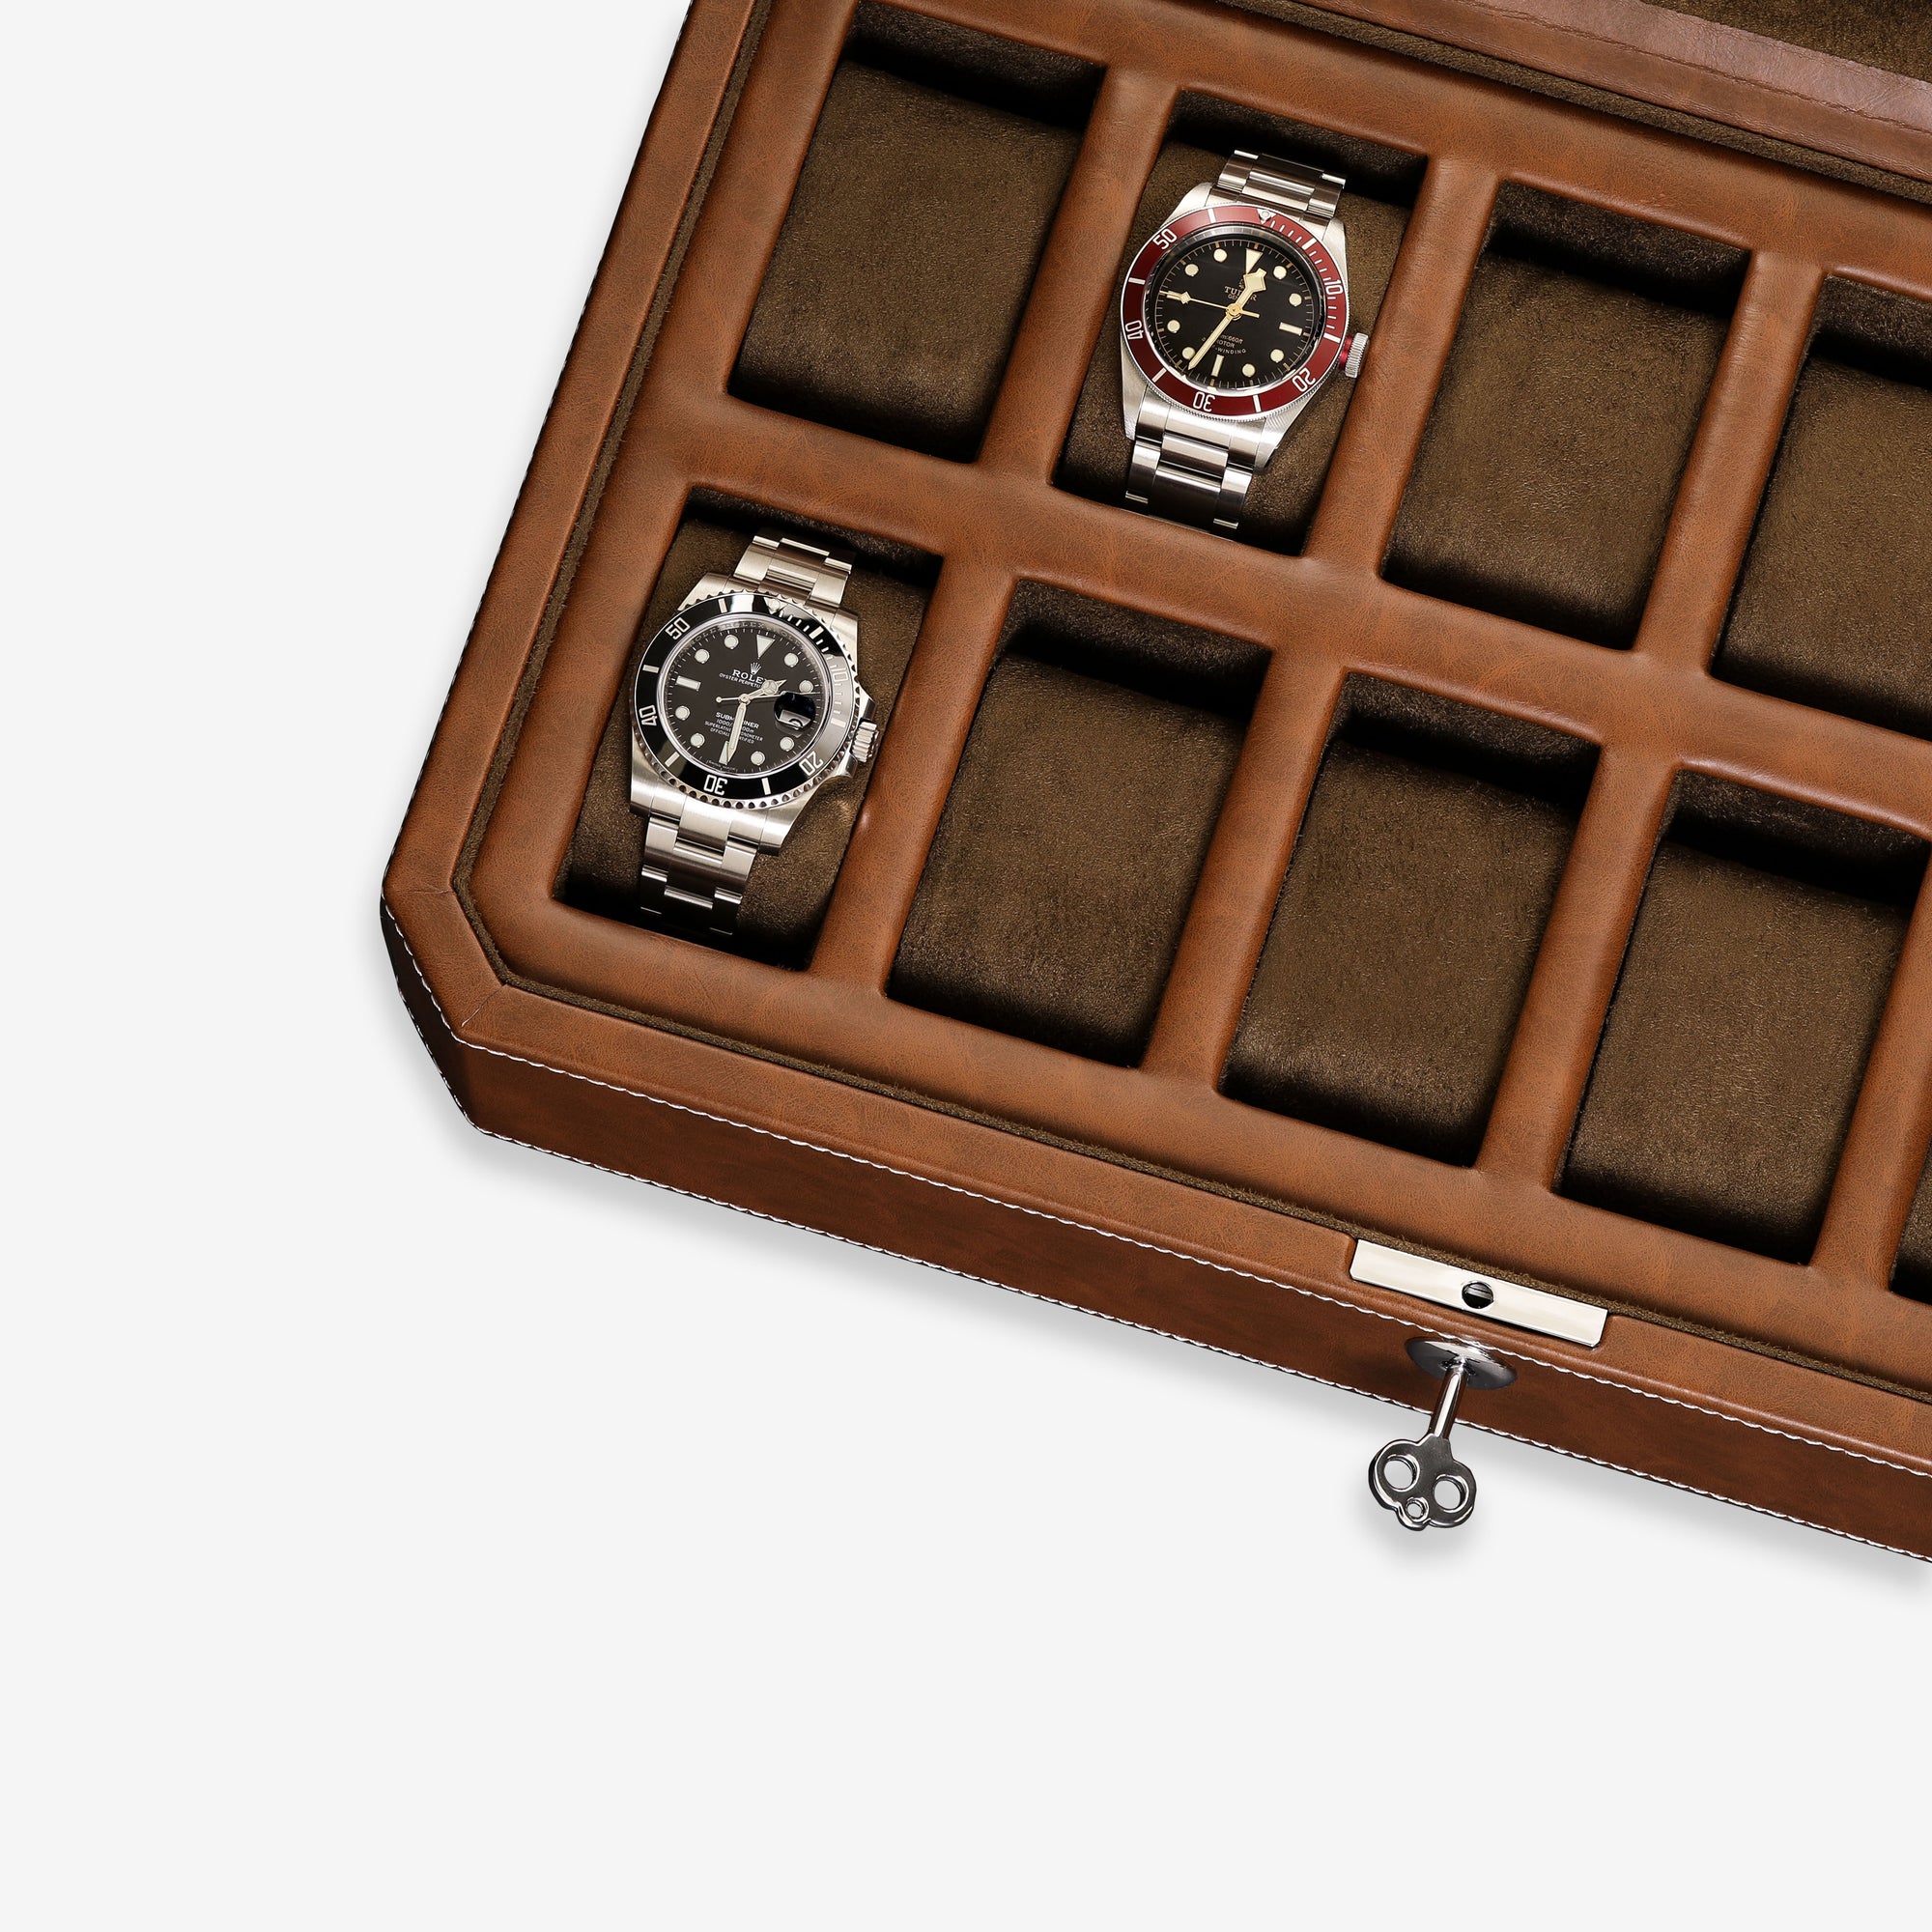 ROTHWELL 12 Slot Leather Watch Box - Luxury Watch Case Display Organizer,  Microsuede Liner, Locking …See more ROTHWELL 12 Slot Leather Watch Box 